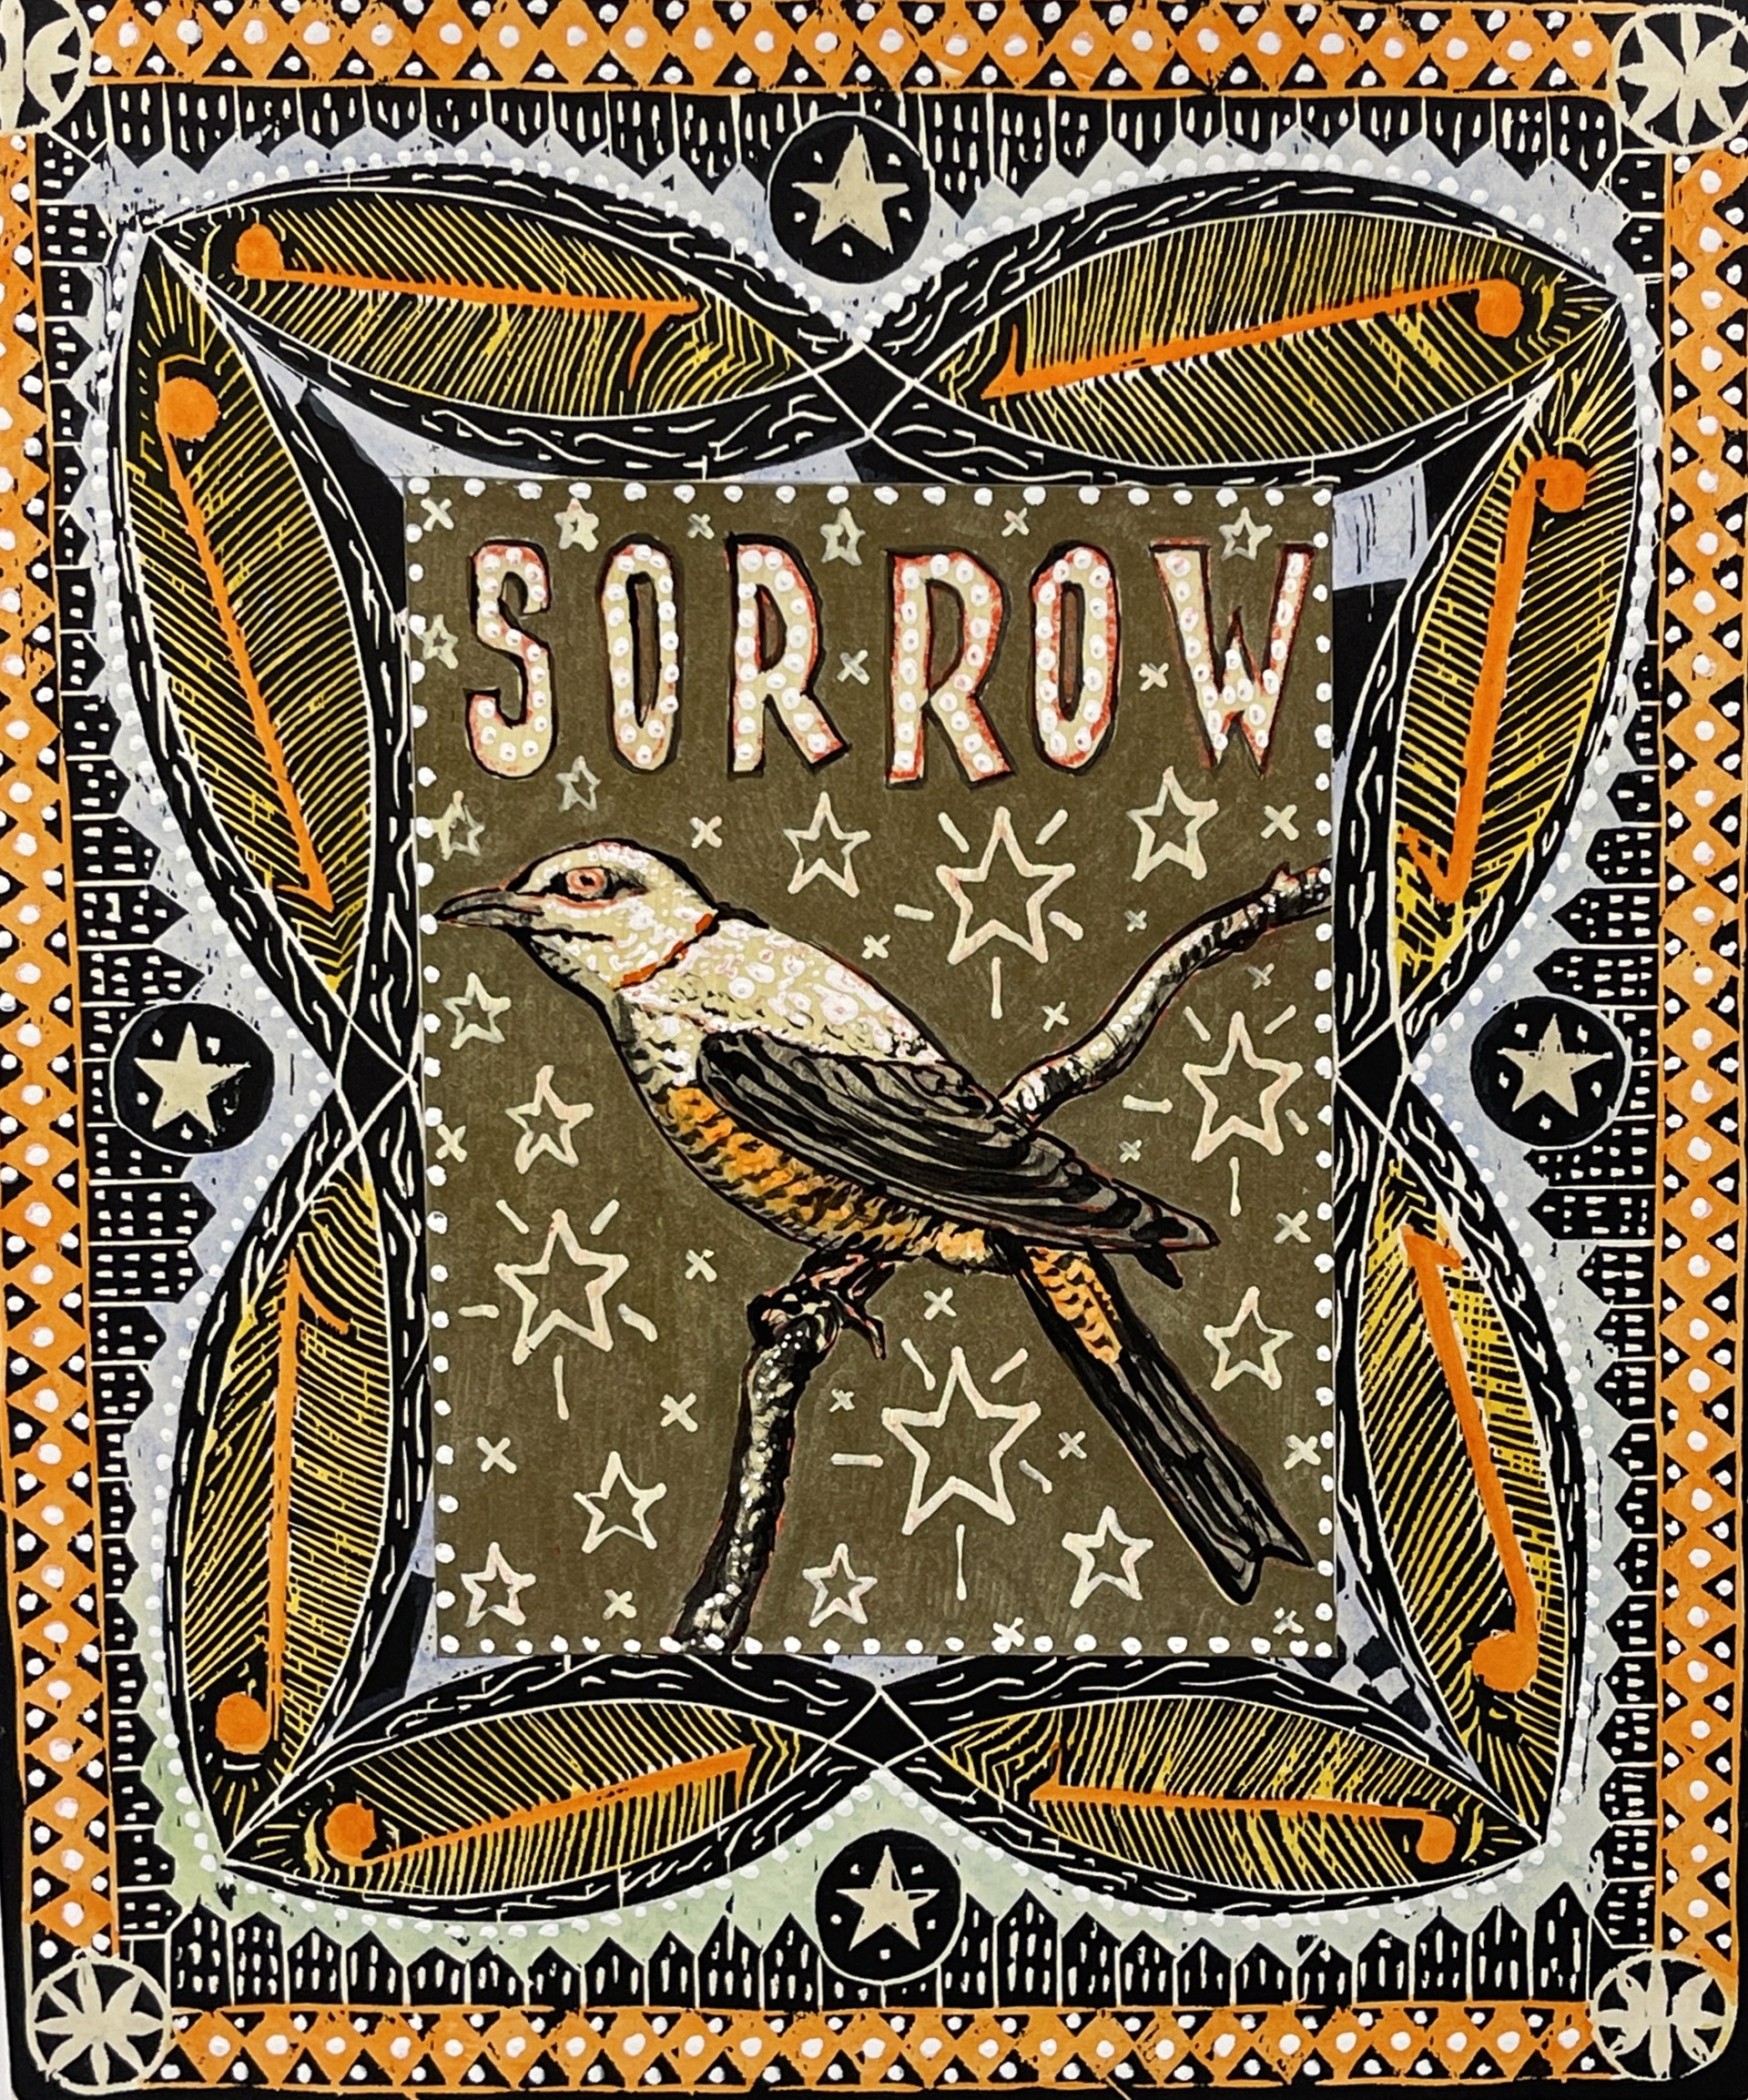 Sorrow by Jon Langford & Jim Sherraden